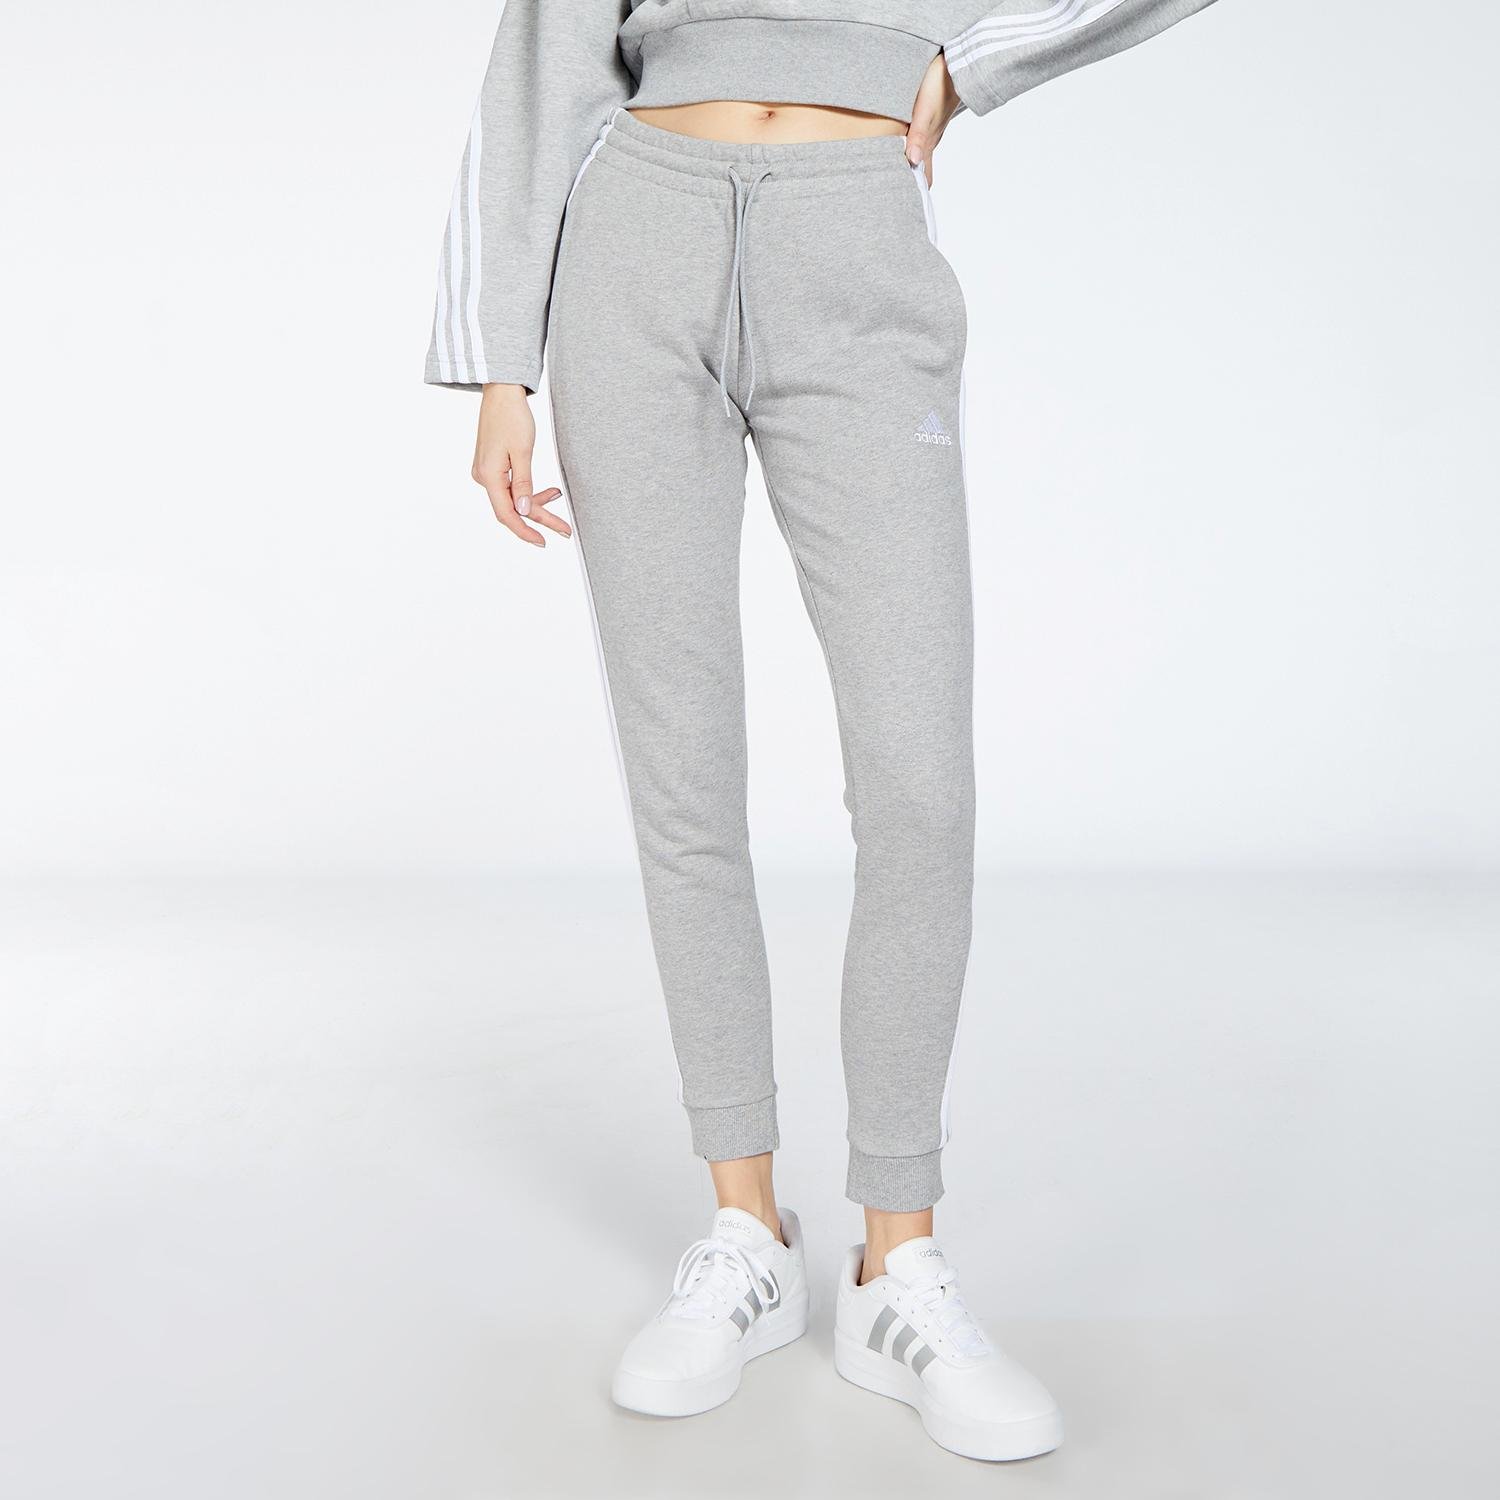 Comprar Pantalón chándal mujer gris Pantalones fitness de mujer